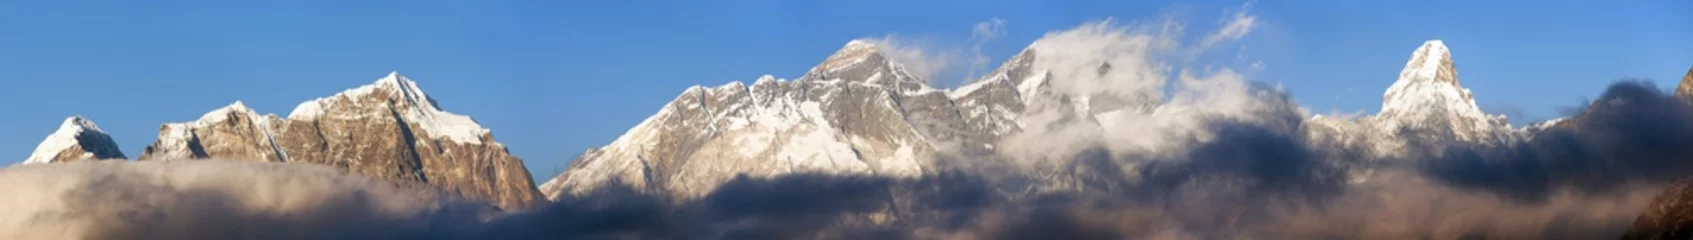 Papier Peint photo autocollant Ama Dablam mount Everest, Lhotse and Ama Dablam panorama